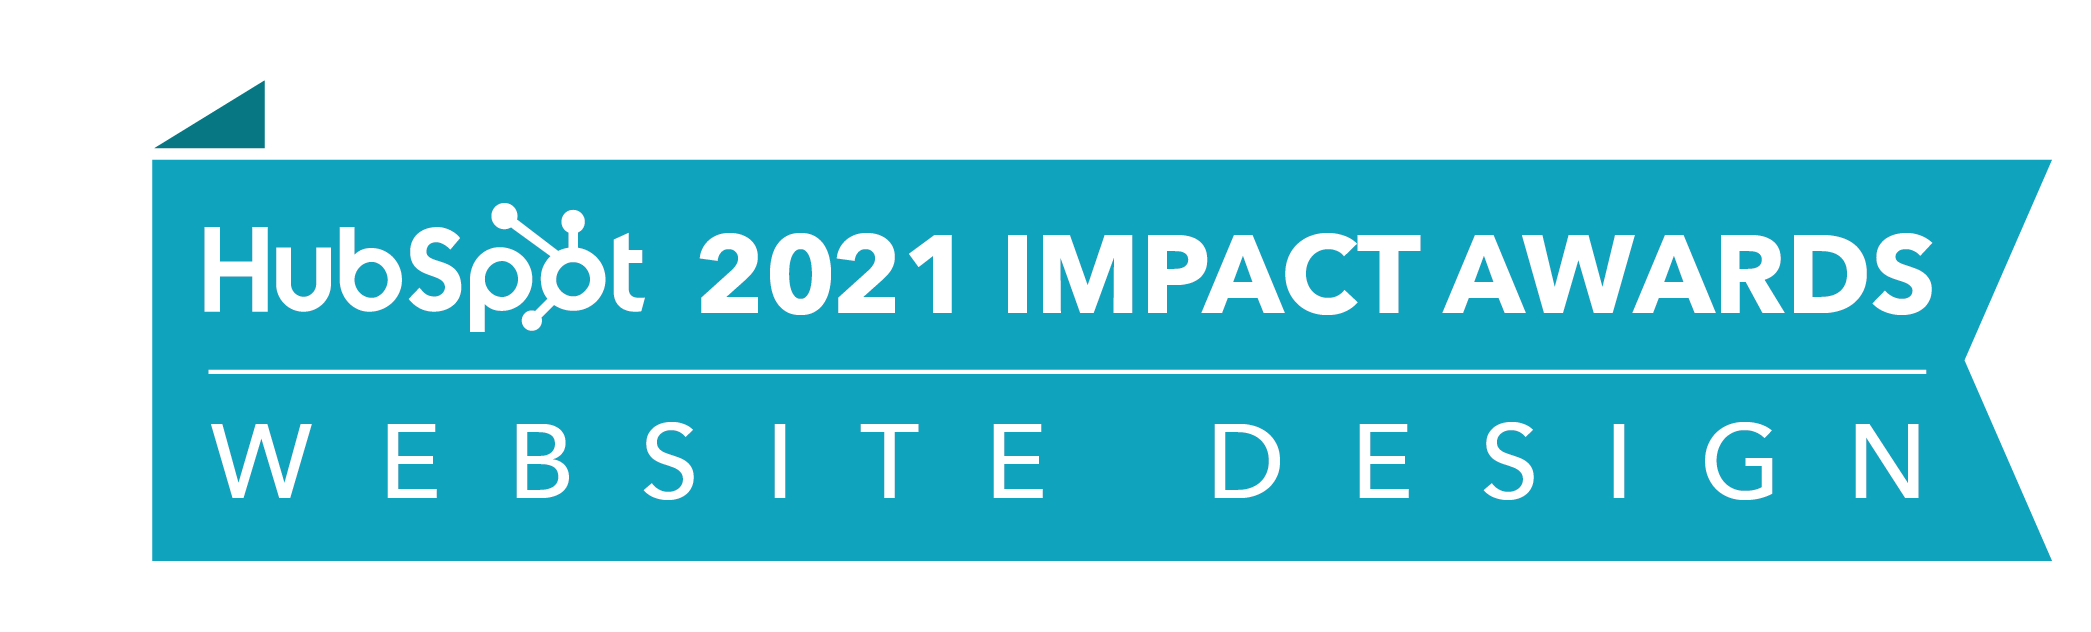 HubSpot_ImpactAwards_2021_WebsiteDesign2-4